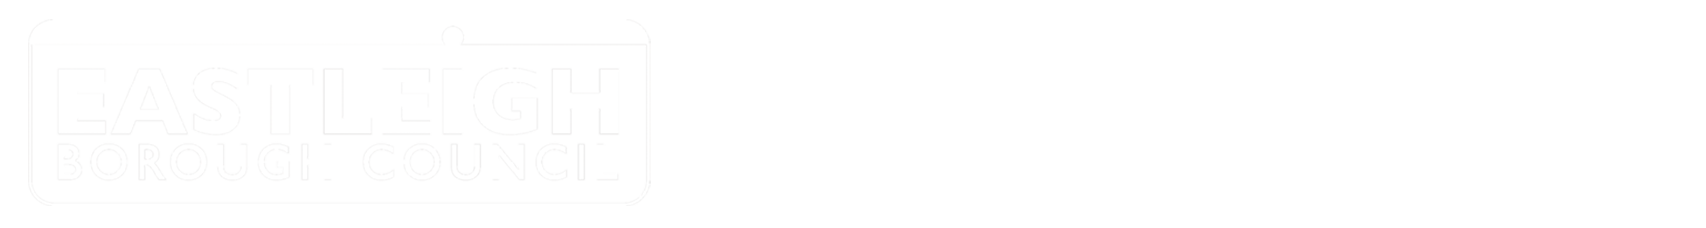 Eastleigh Borough Council's logo and Arts Council England logos in white next to one another